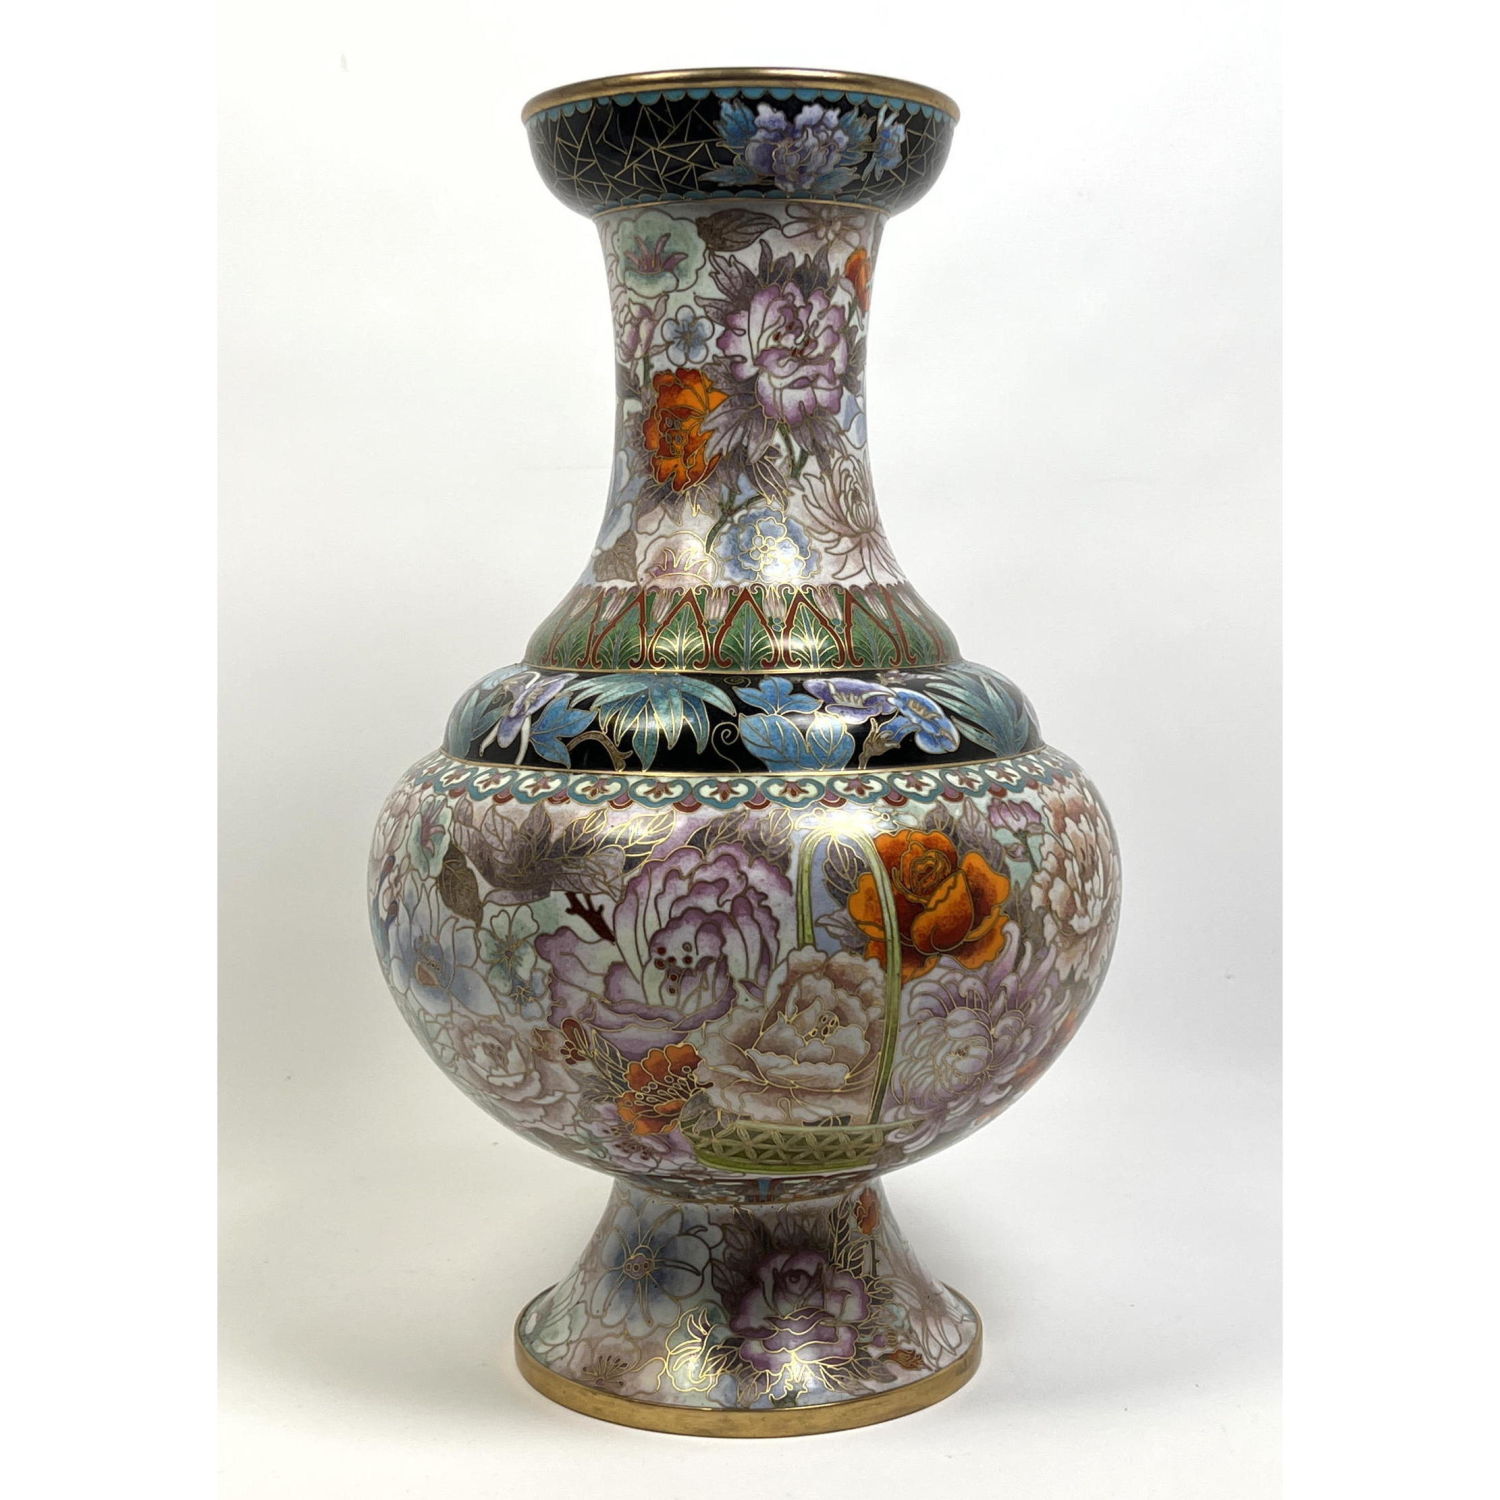 15" Tall Cloisonne Enamel Vase,